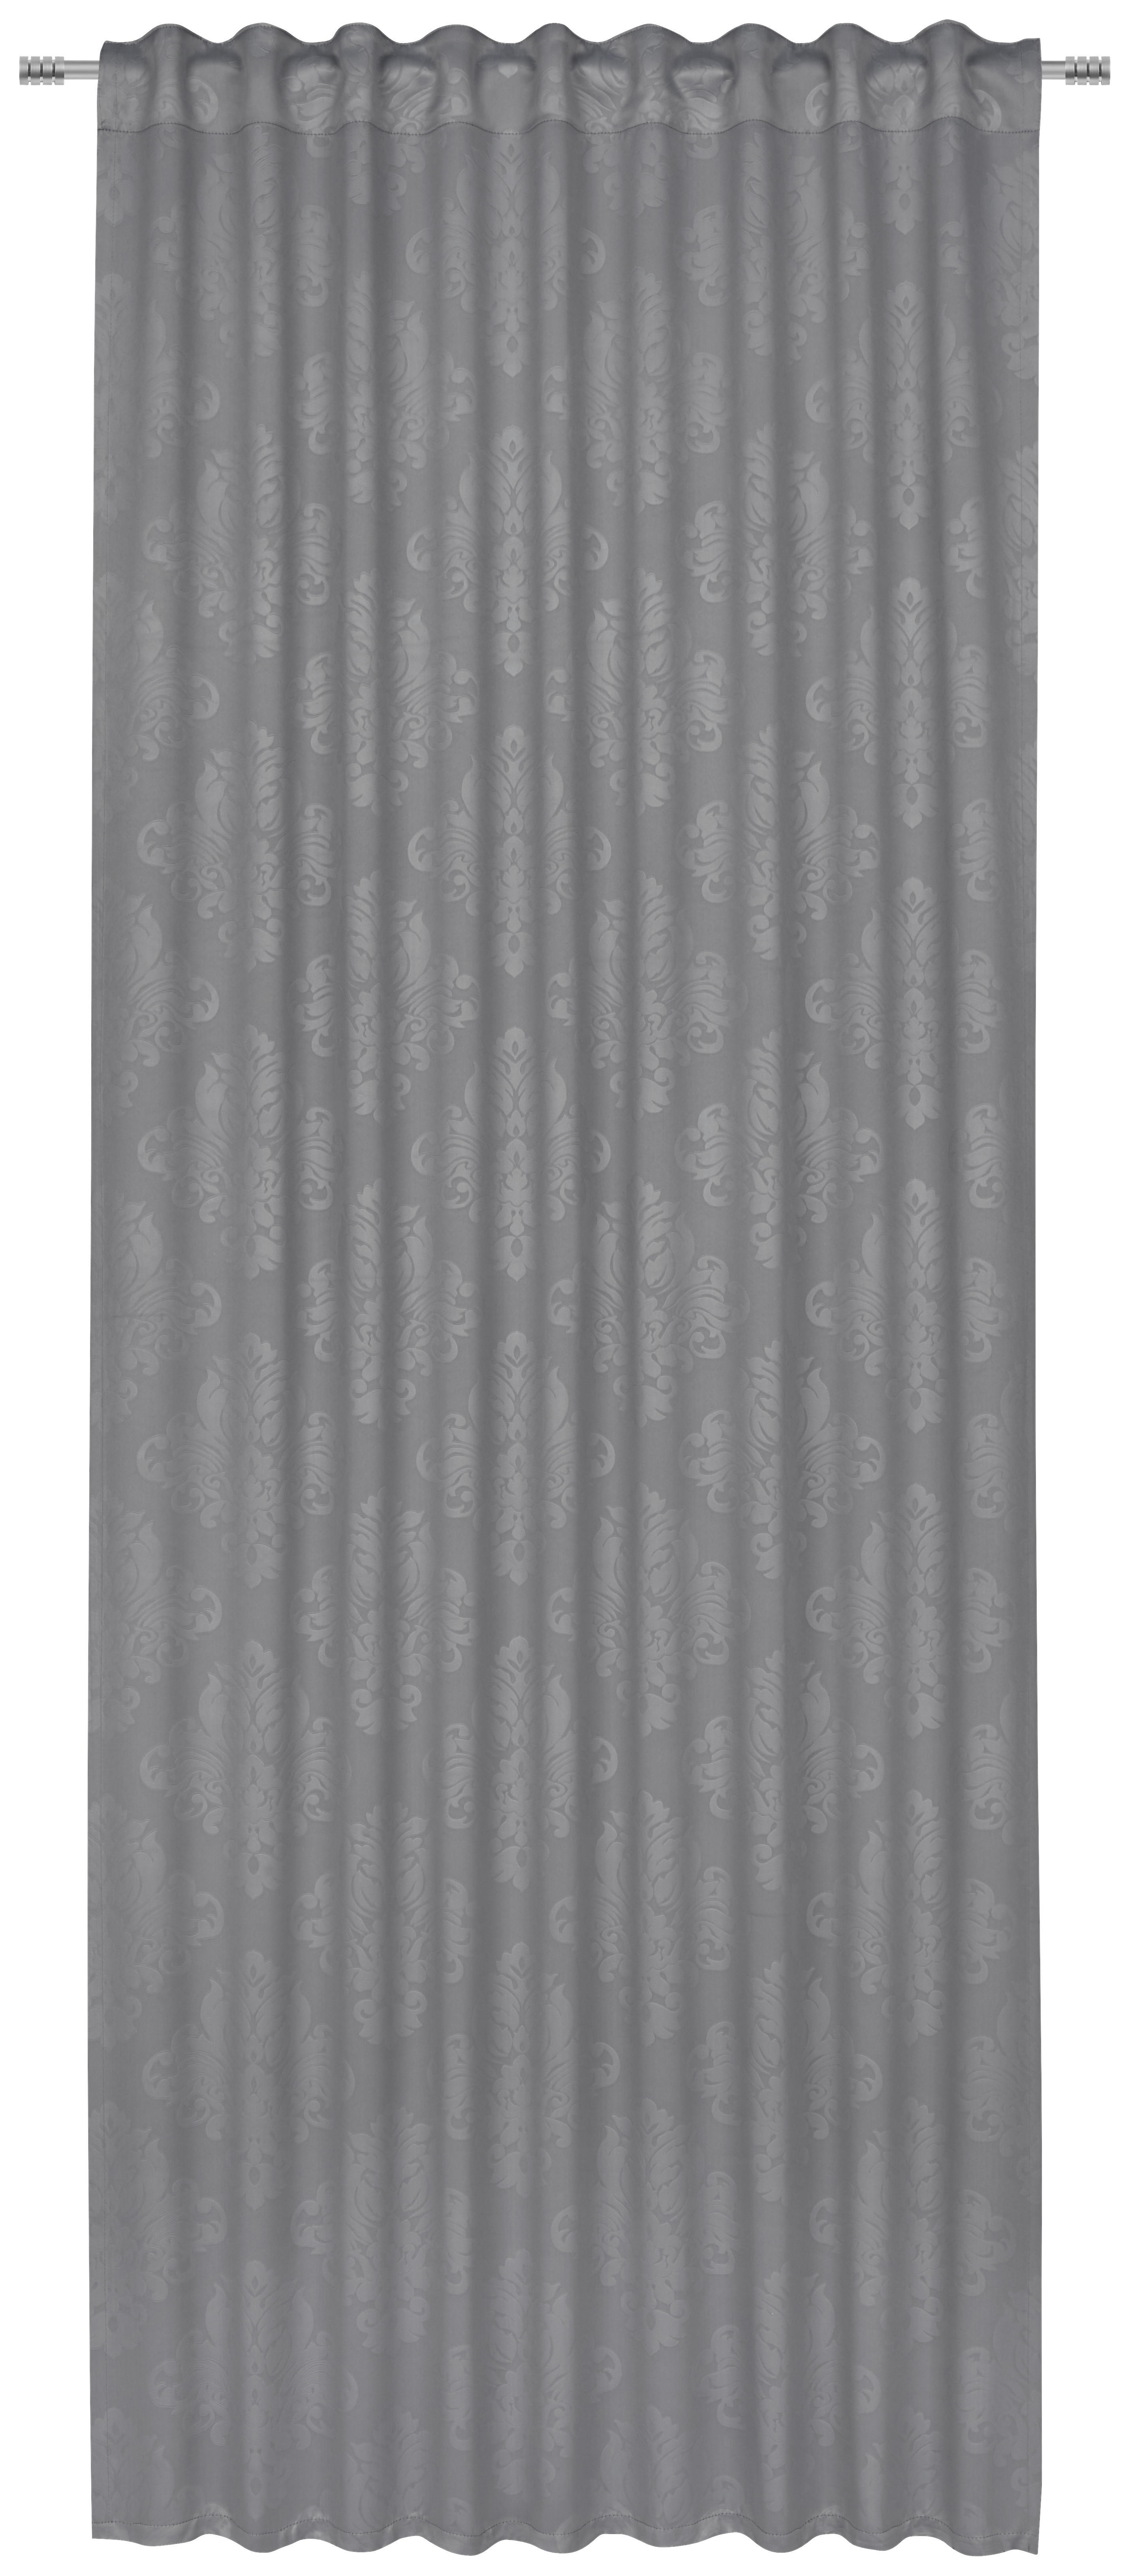 DRAPERIE GATA CONFECȚIONATĂ black-out (nu permite trecerea luminii)  - gri, Konventionell, textil (135/245cm) - Boxxx